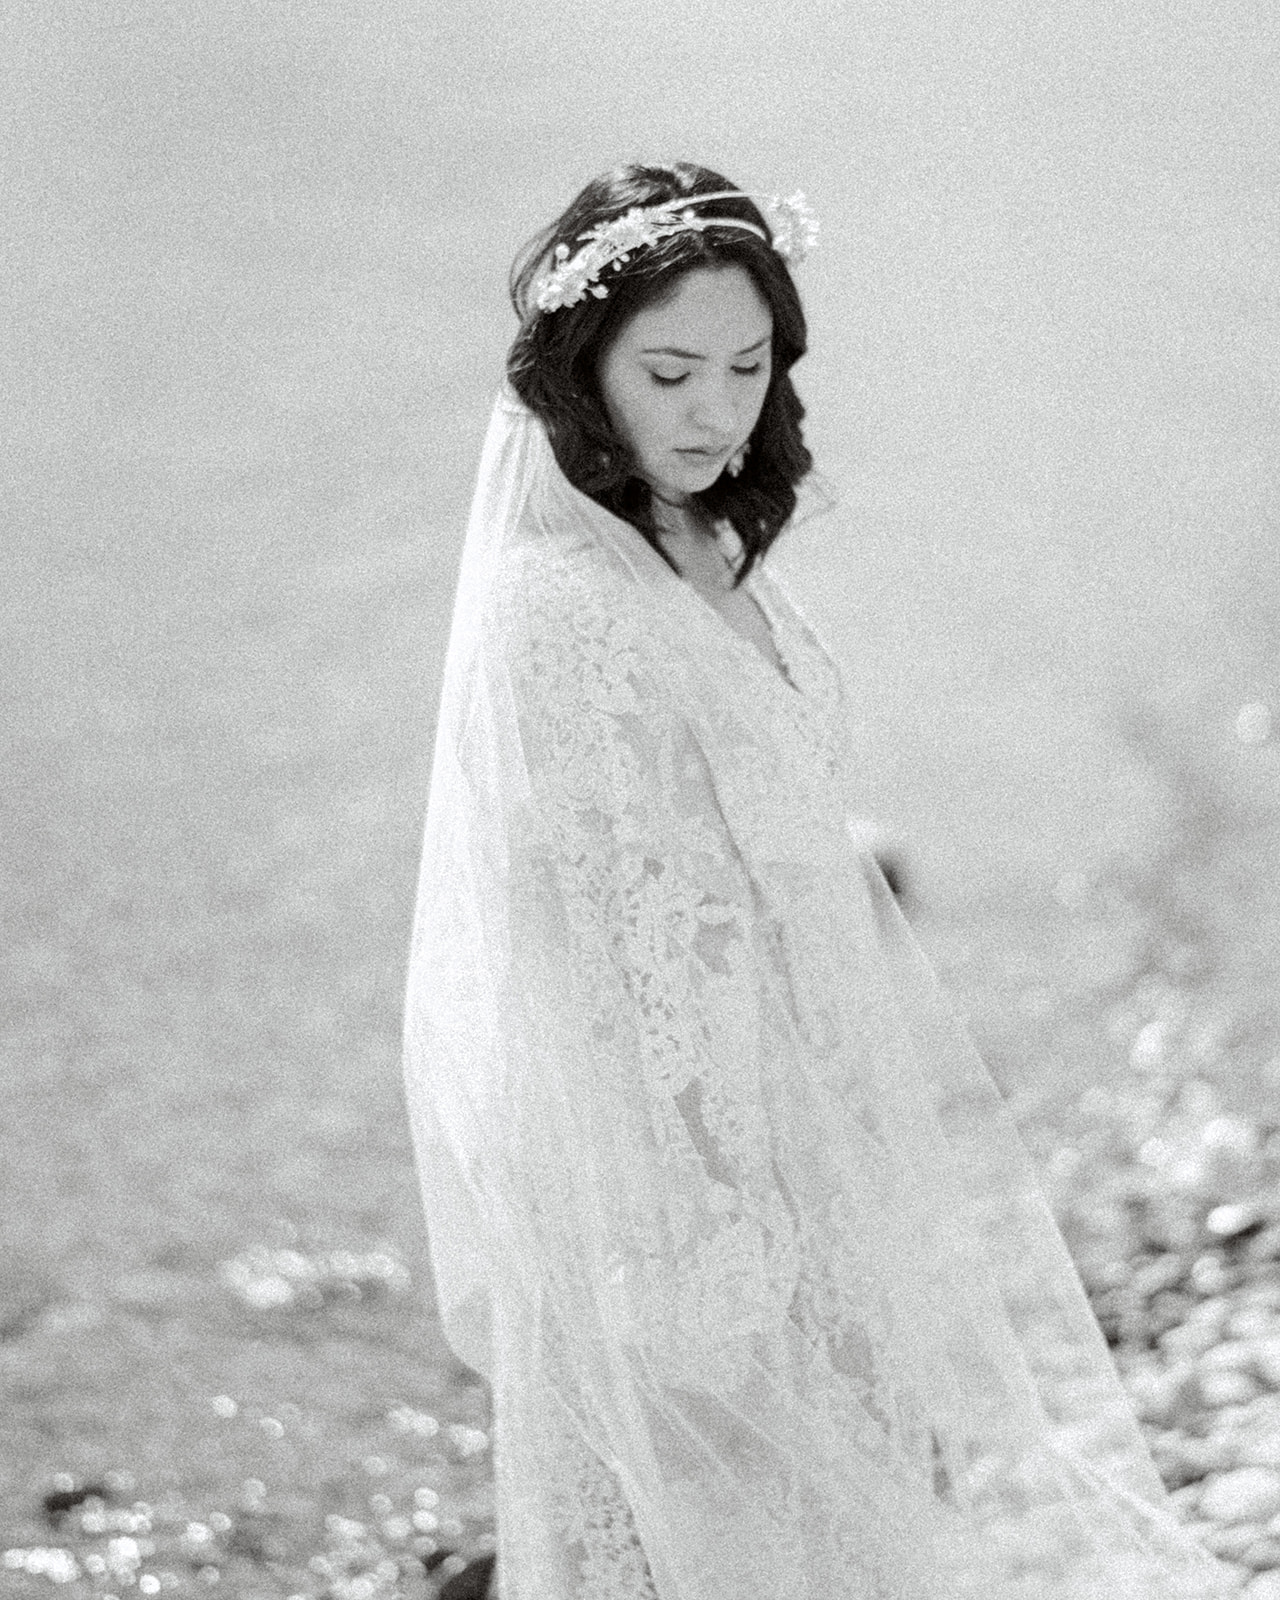 Bride wearing Julia gown by Anna Kova, intimate Okanagan bridal portraits, lakeside and mountain elopement inspiration.